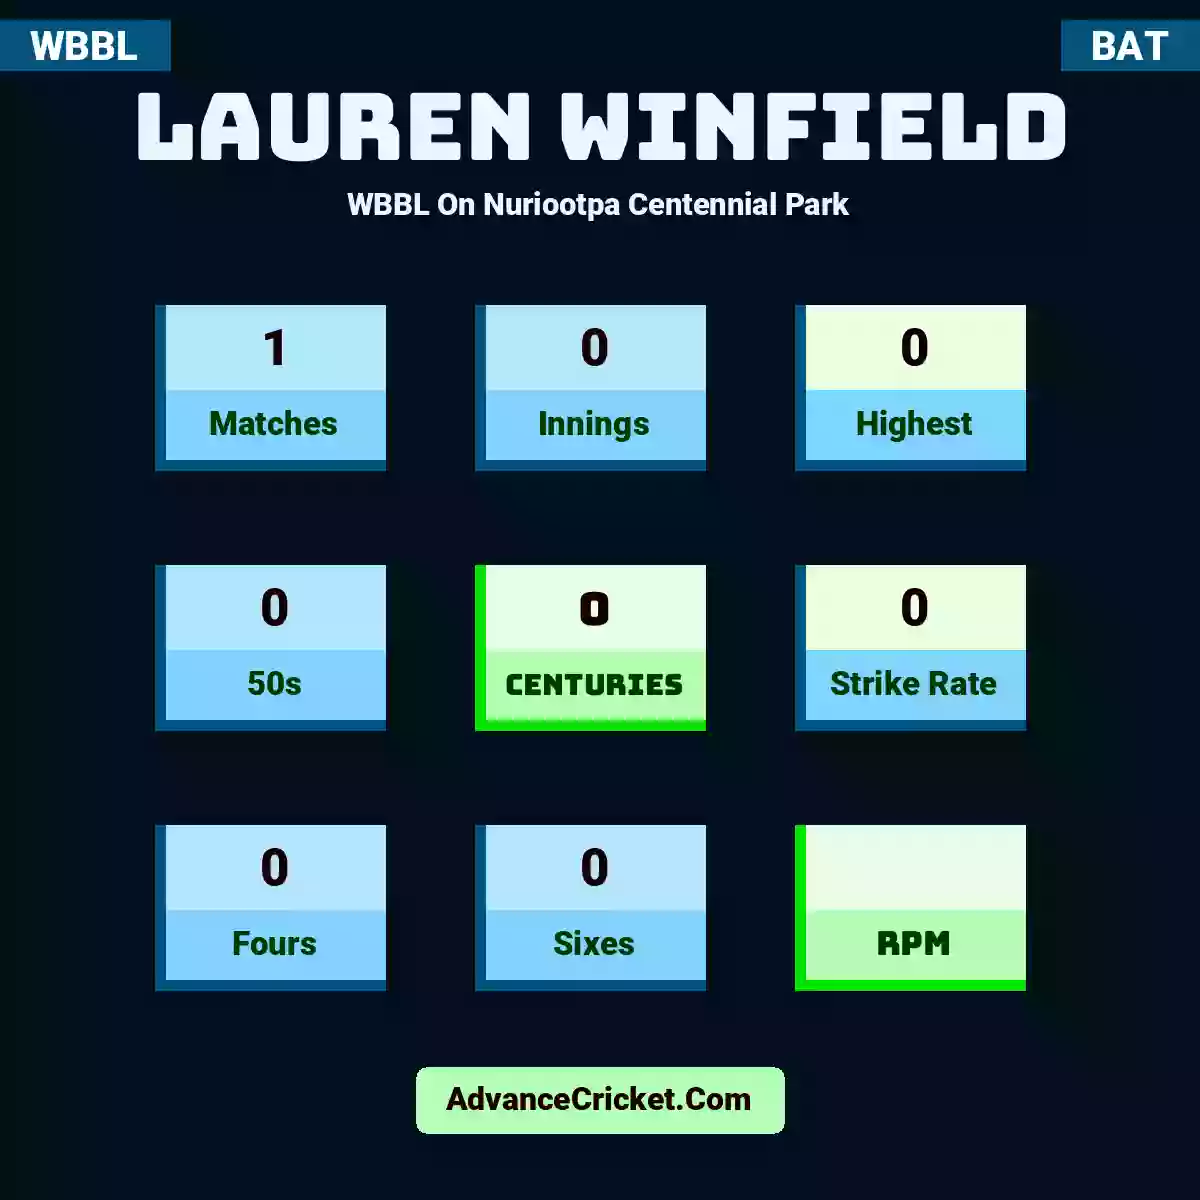 Lauren Winfield WBBL  On Nuriootpa Centennial Park, Lauren Winfield played 1 matches, scored 0 runs as highest, 0 half-centuries, and 0 centuries, with a strike rate of 0. L.Winfield hit 0 fours and 0 sixes.